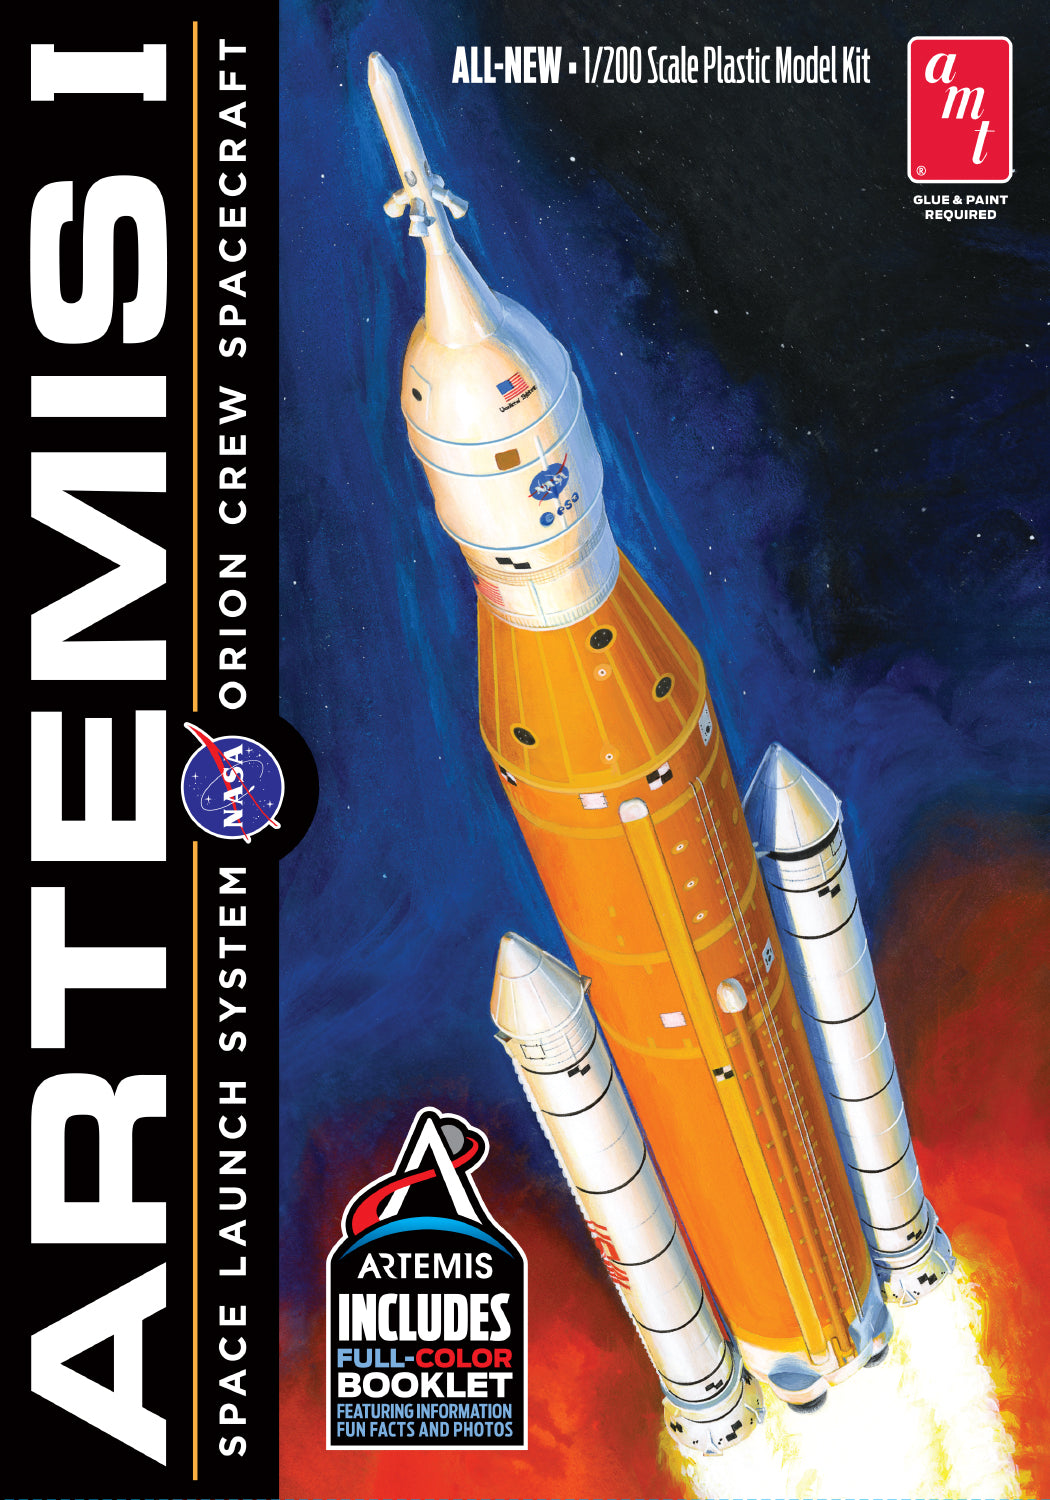 118-1423 AMT COHETE ARTEMIS-1 DE LA NASA (1/200)